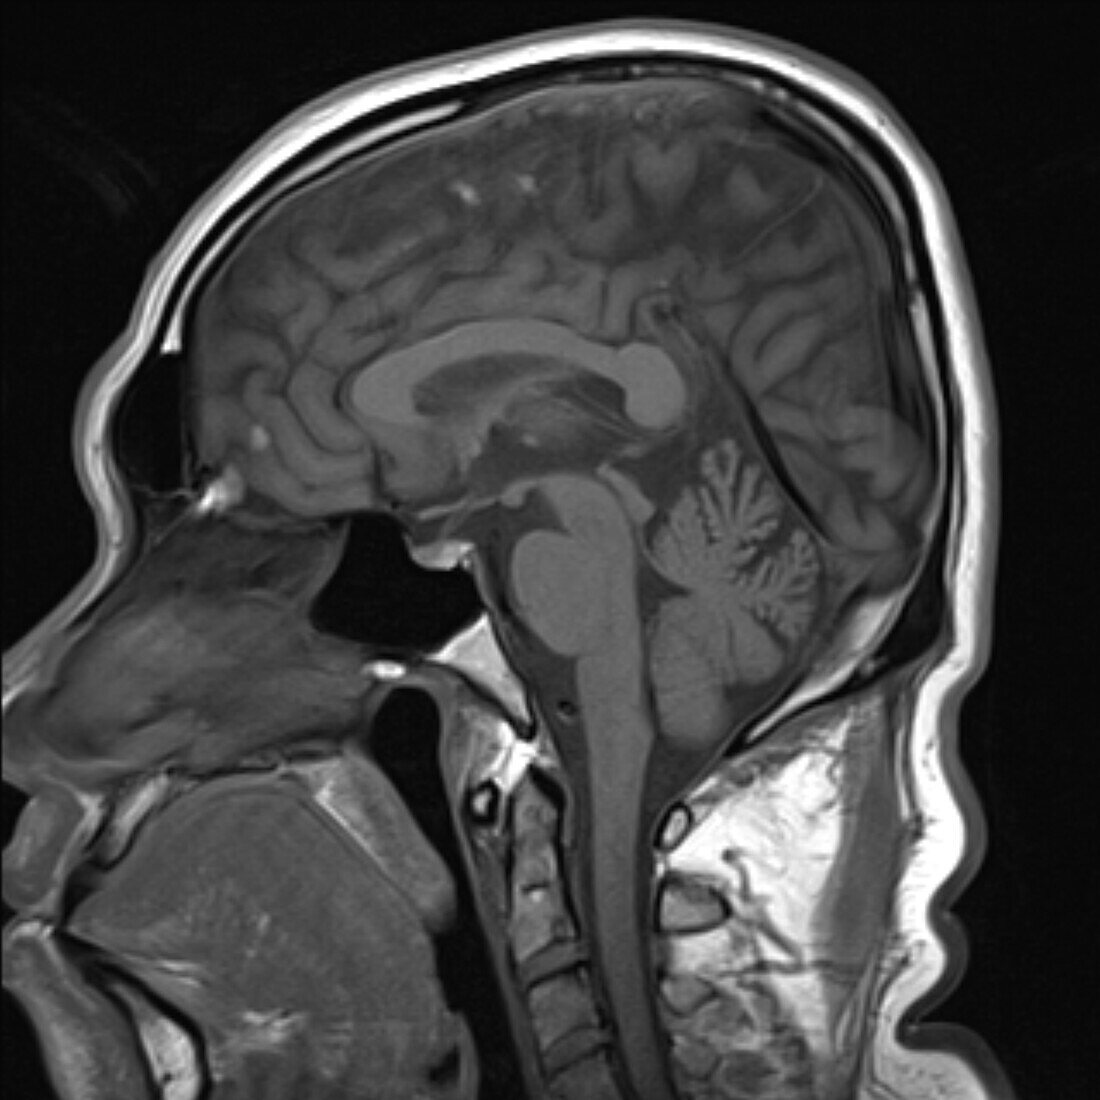 Healthy human brain, MRI scan